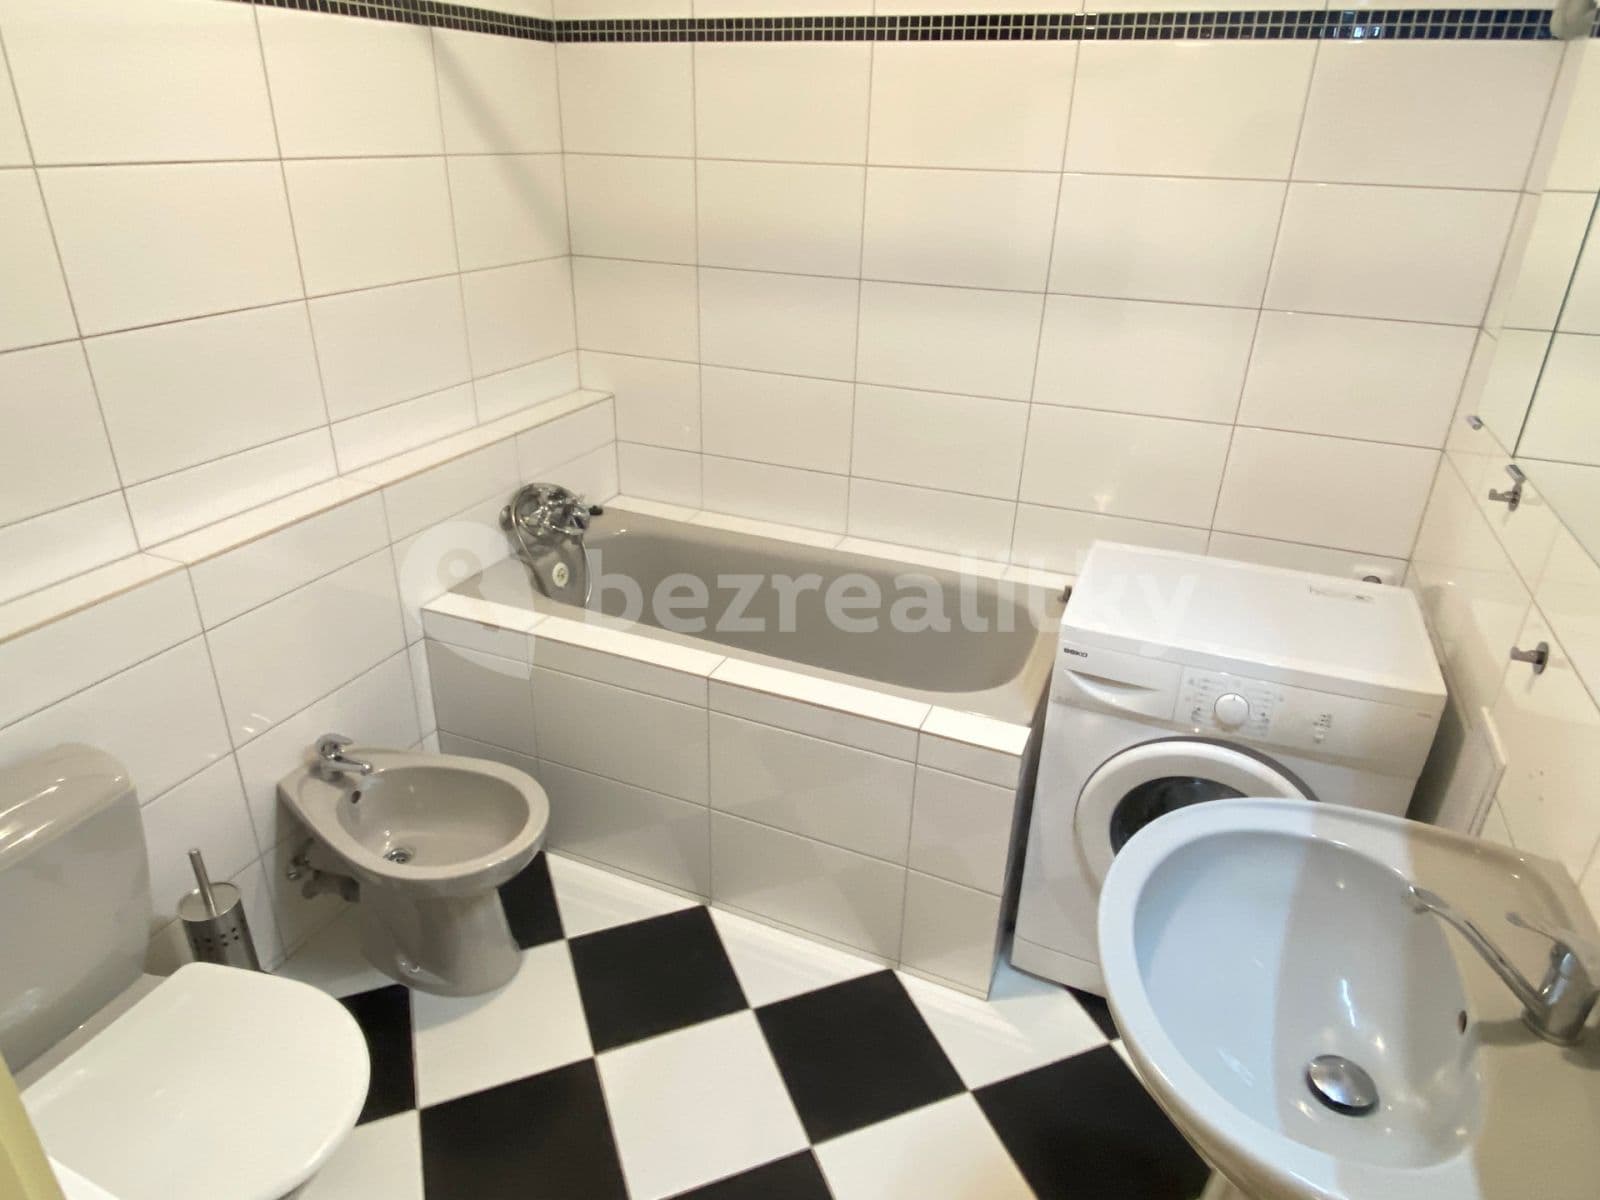 1 bedroom with open-plan kitchen flat to rent, 57 m², Biskupcova, Prague, Prague